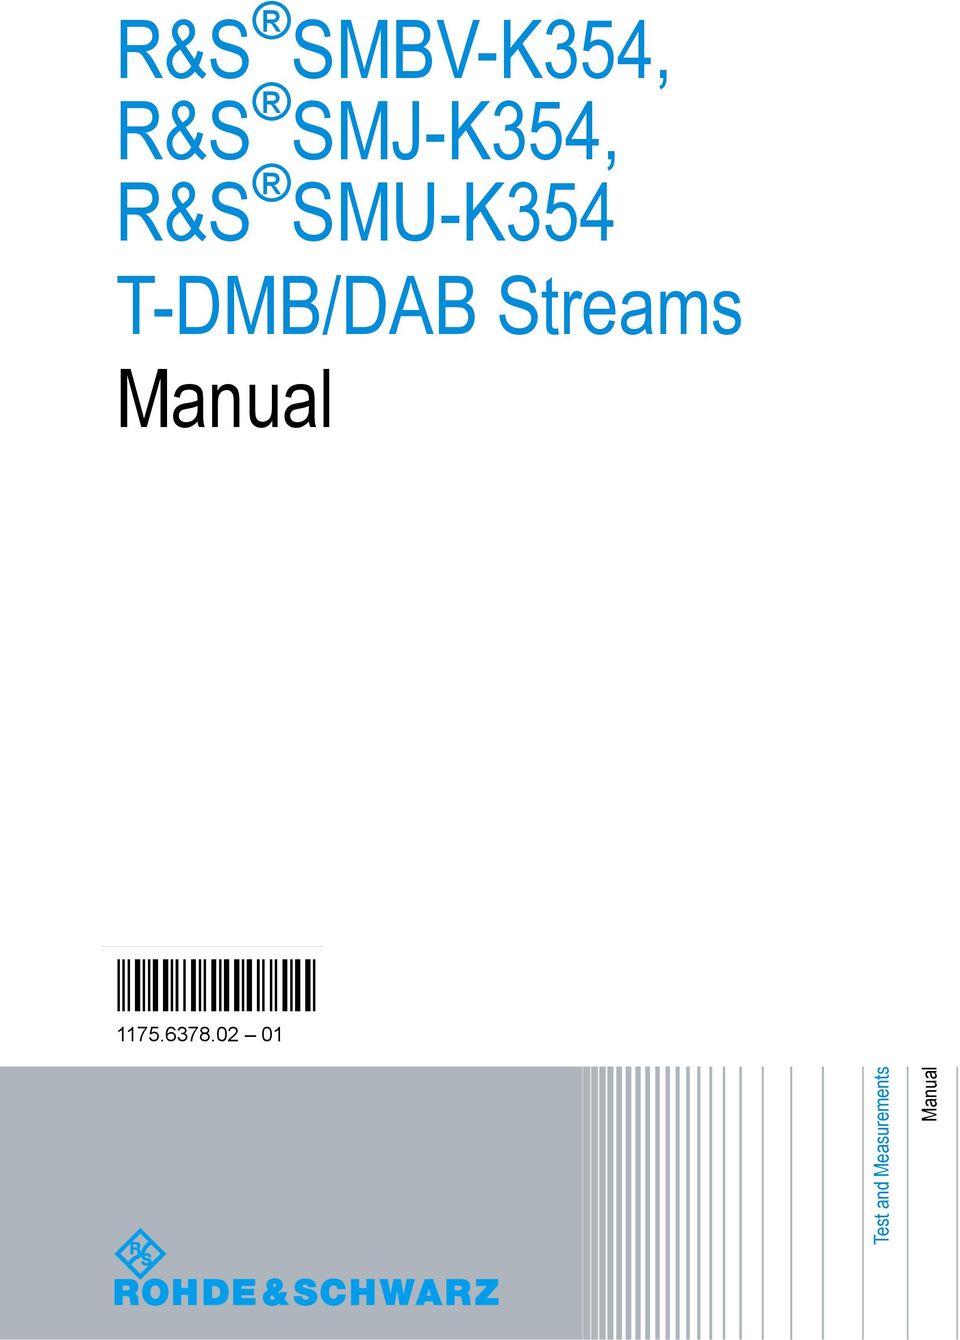 T-DMB/DAB Streams Manual